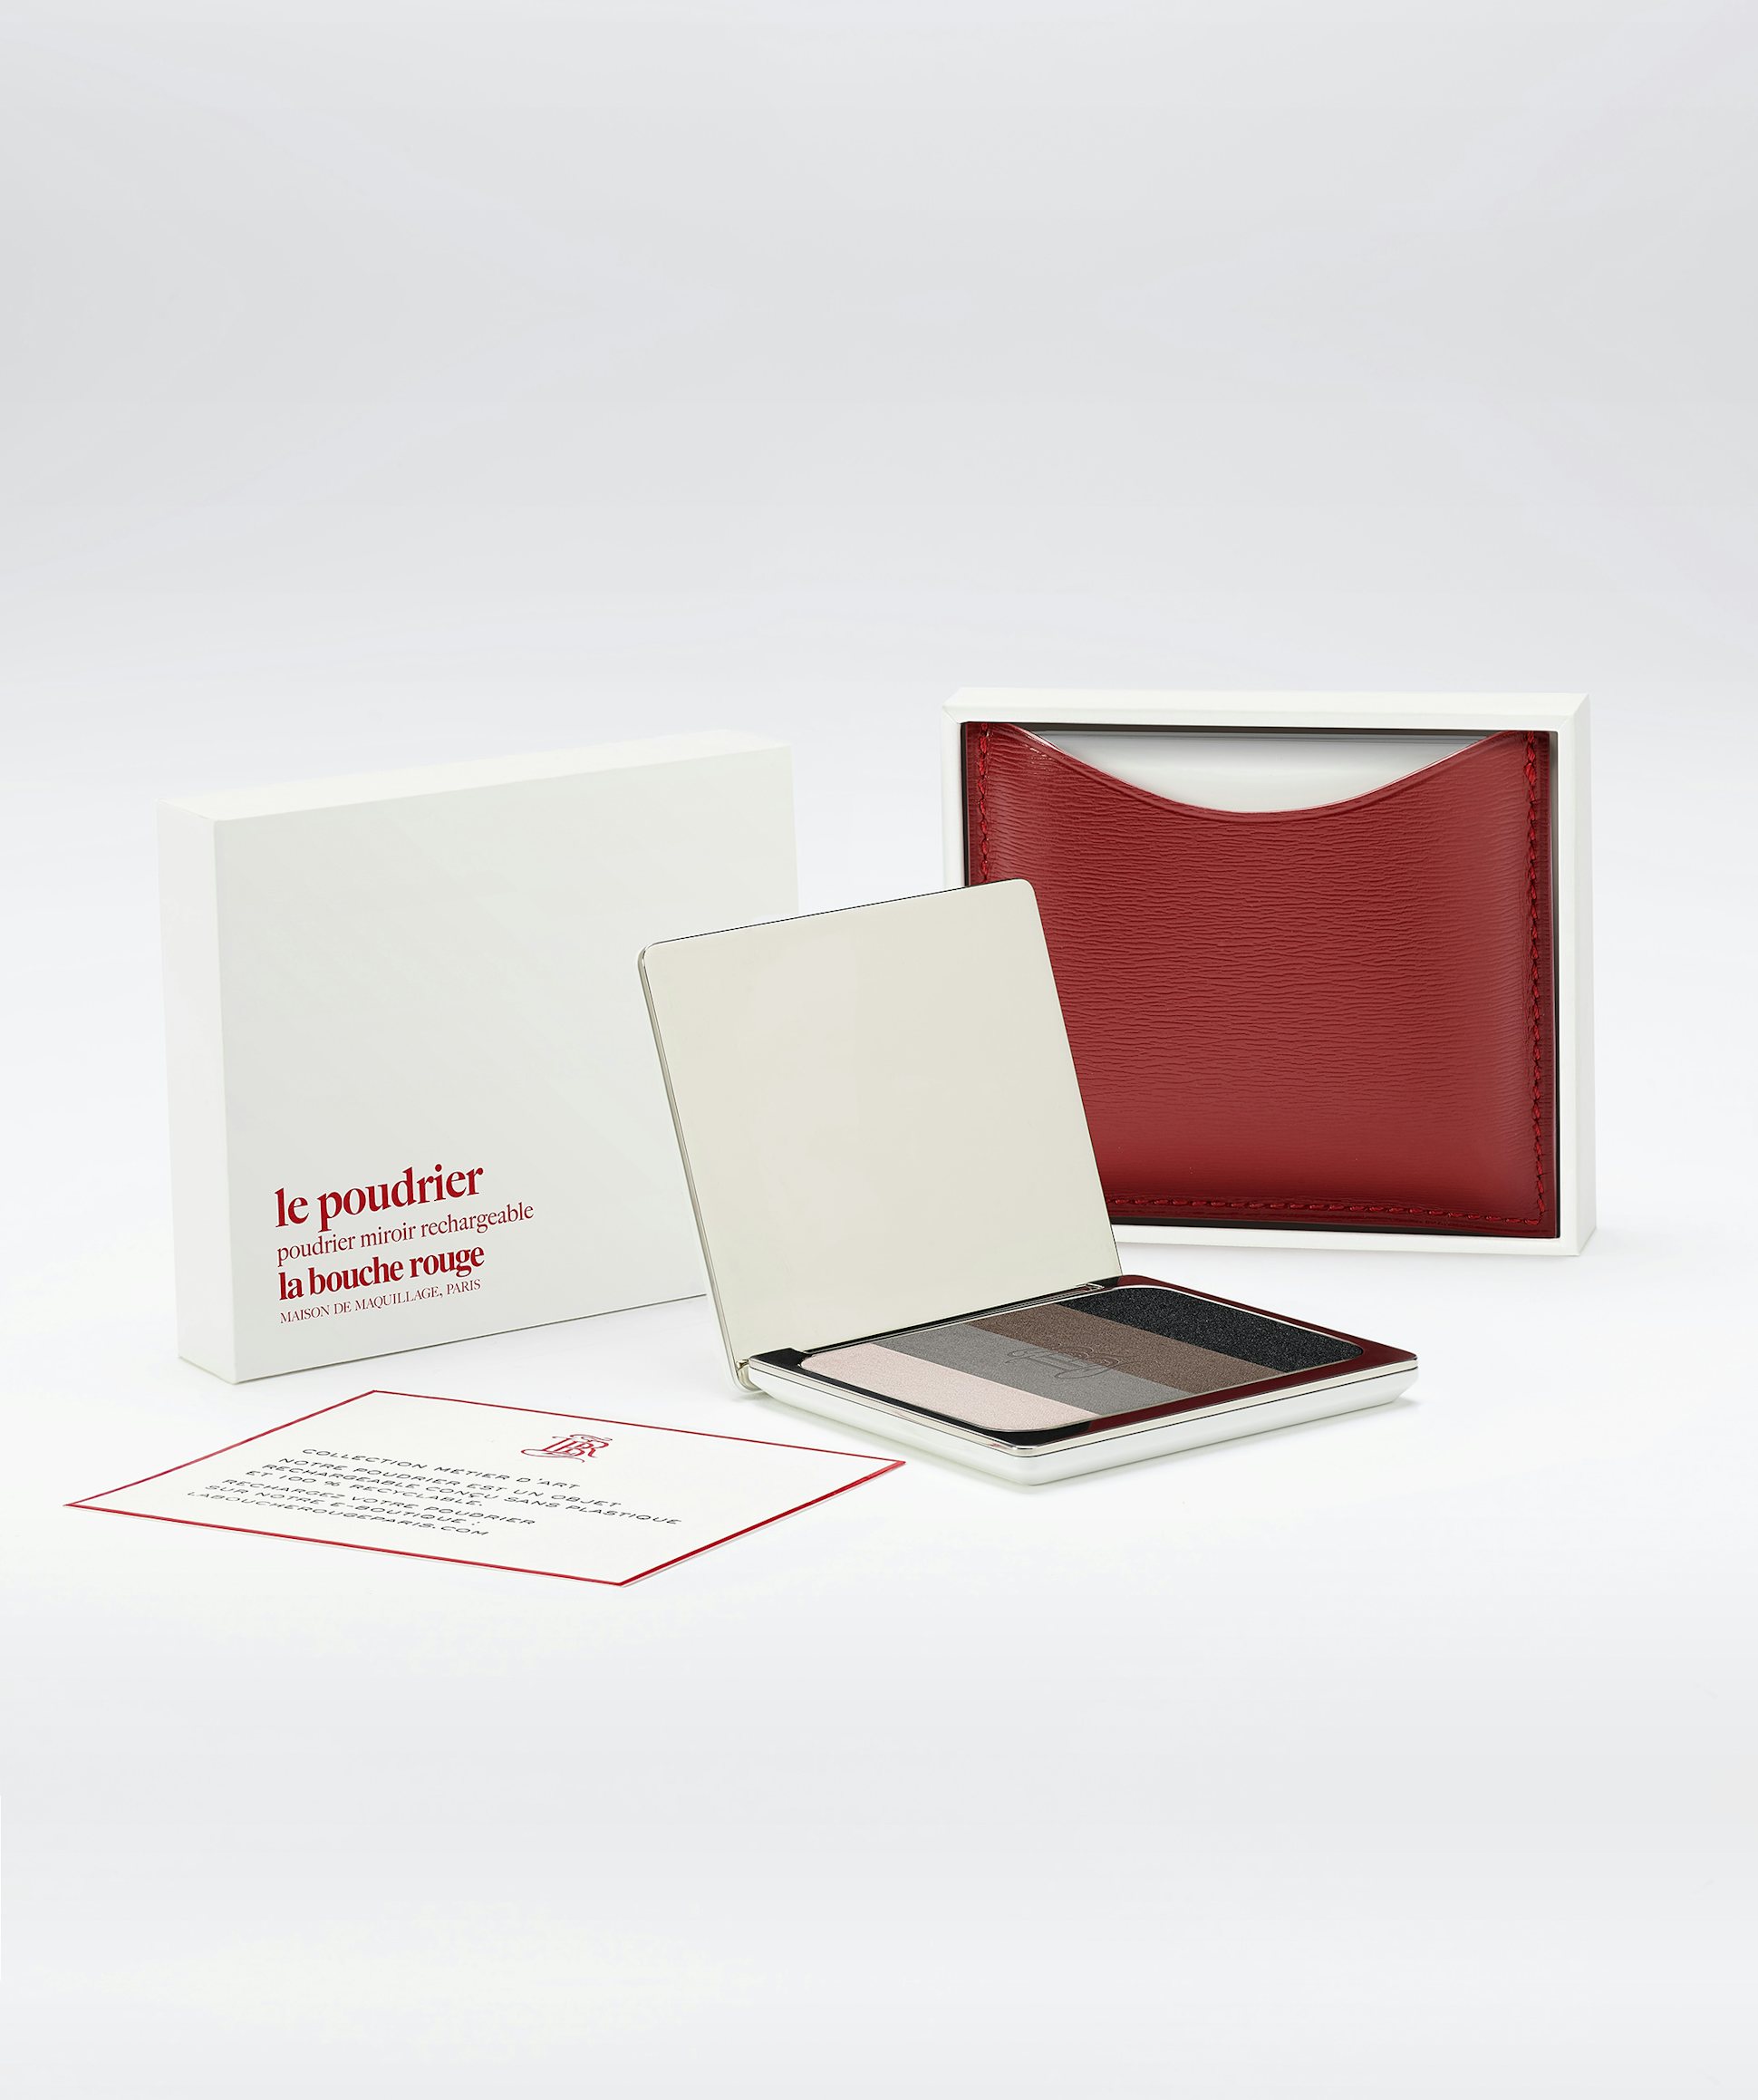 	La bouche rouge, Paris Les Ombres Mead in the red fine leather compact case